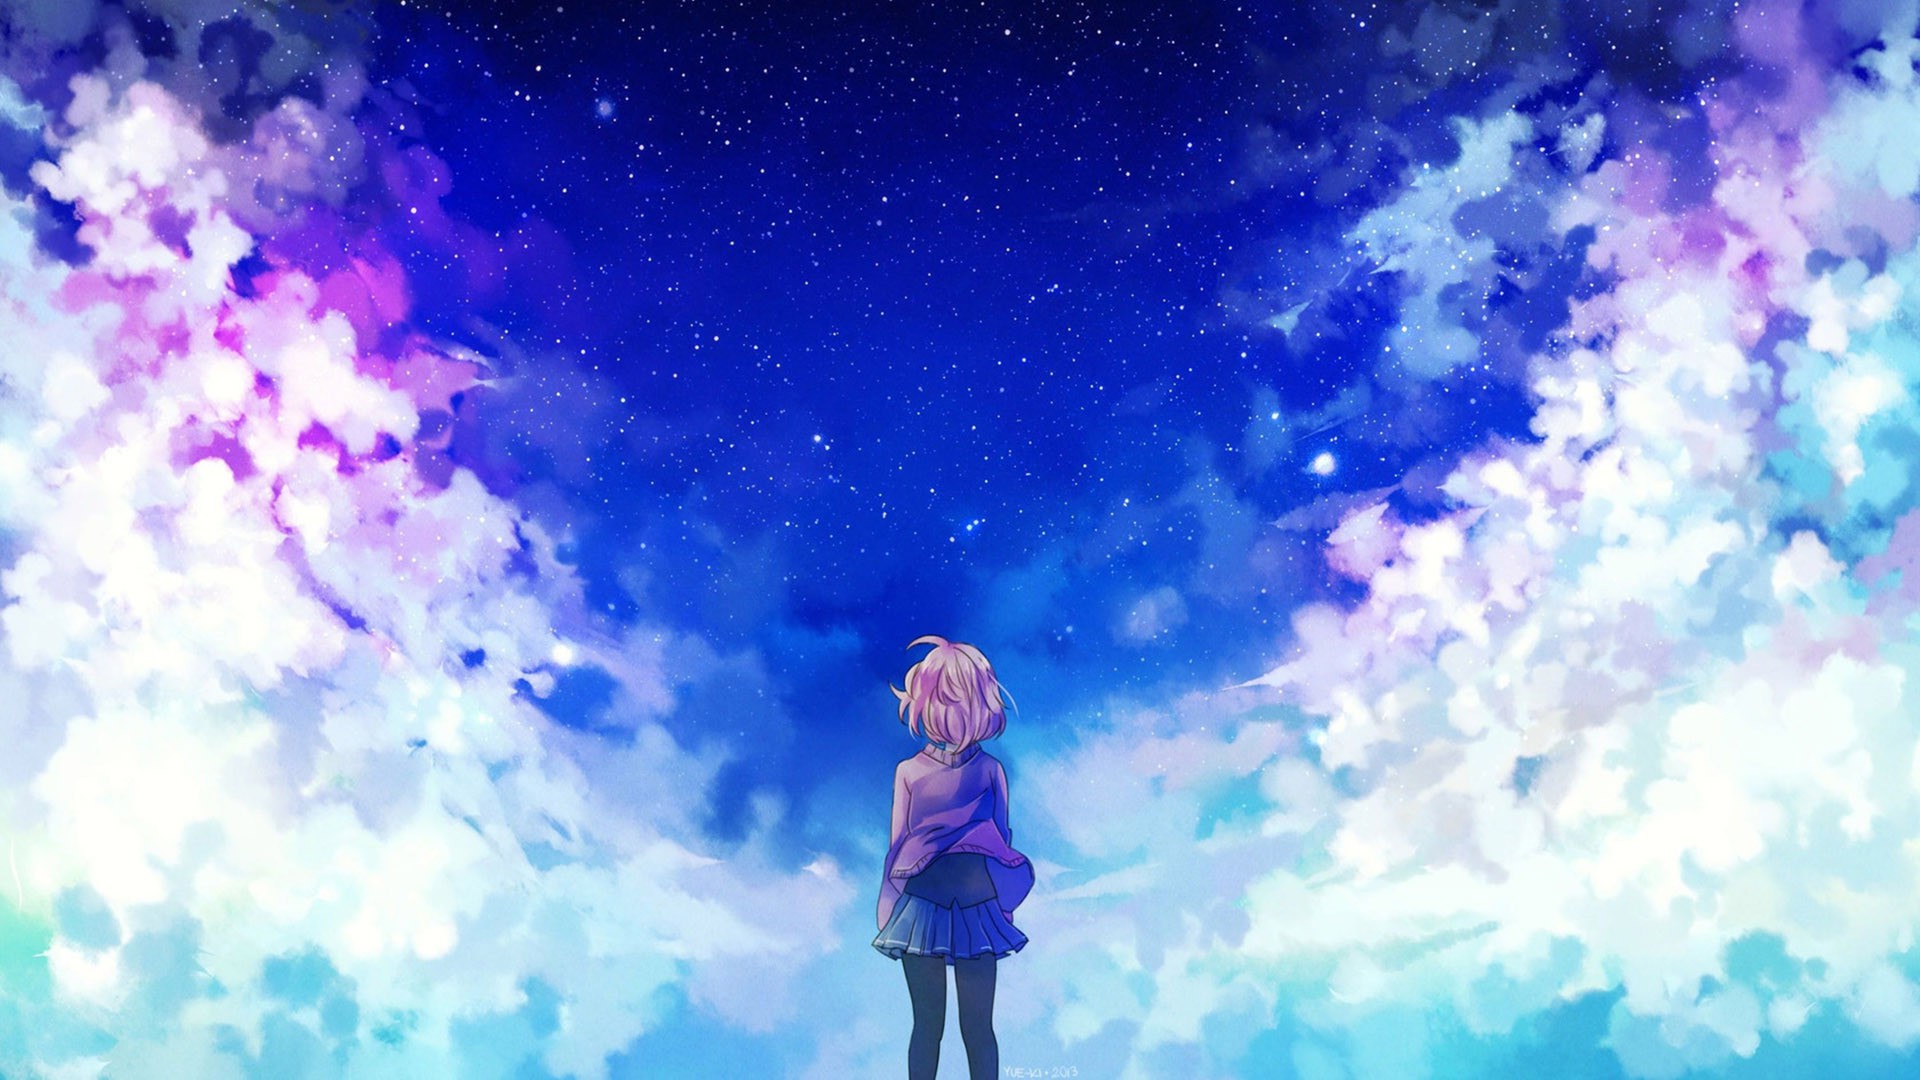 Galaxy Anime Girl Wallpaper